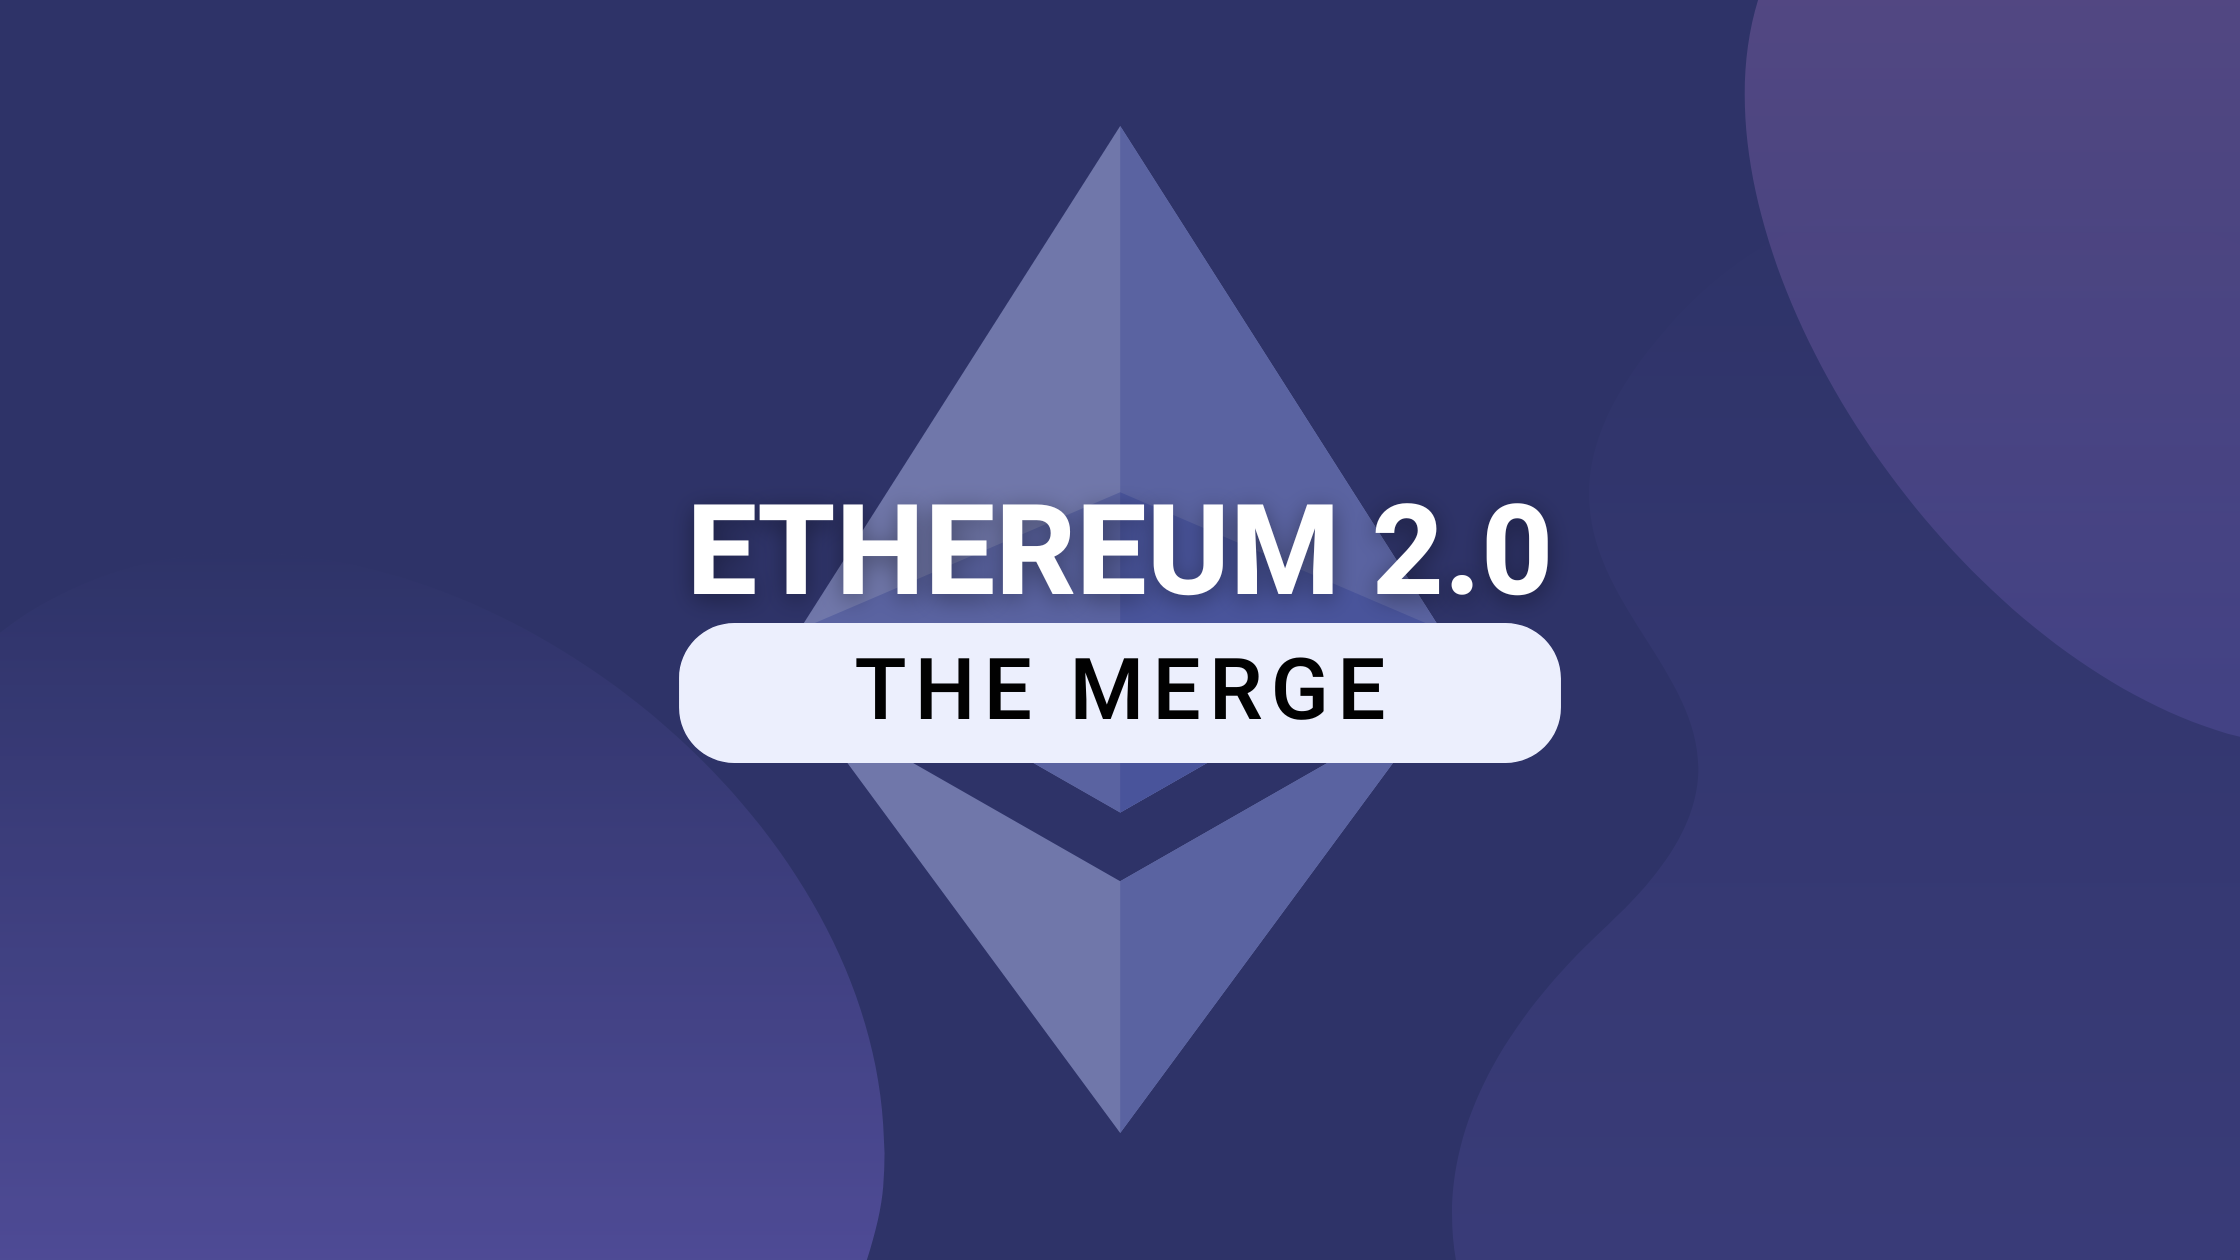 Merge is Ethereum